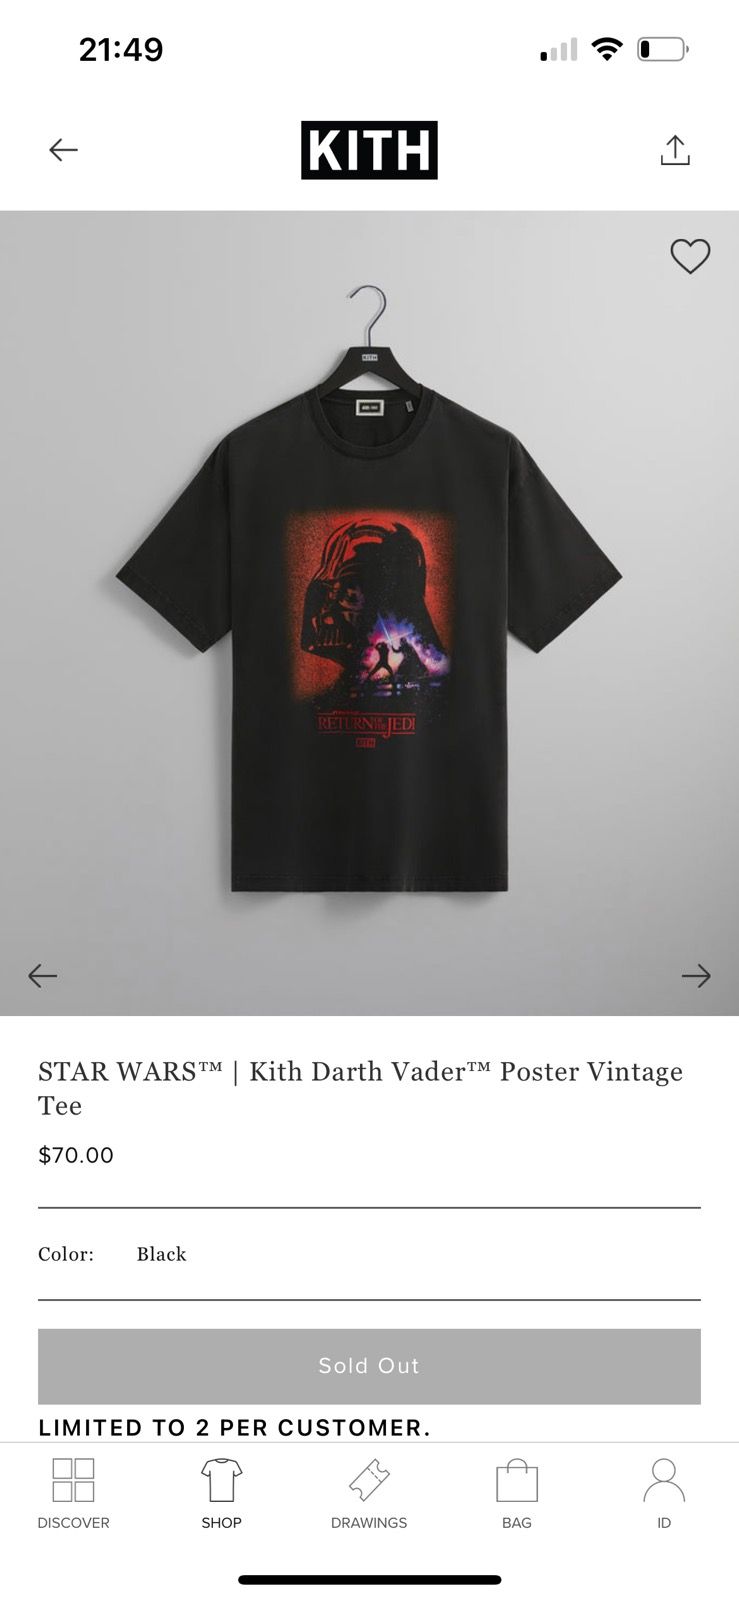 Kith Darth Vader Poster Vintage Tee